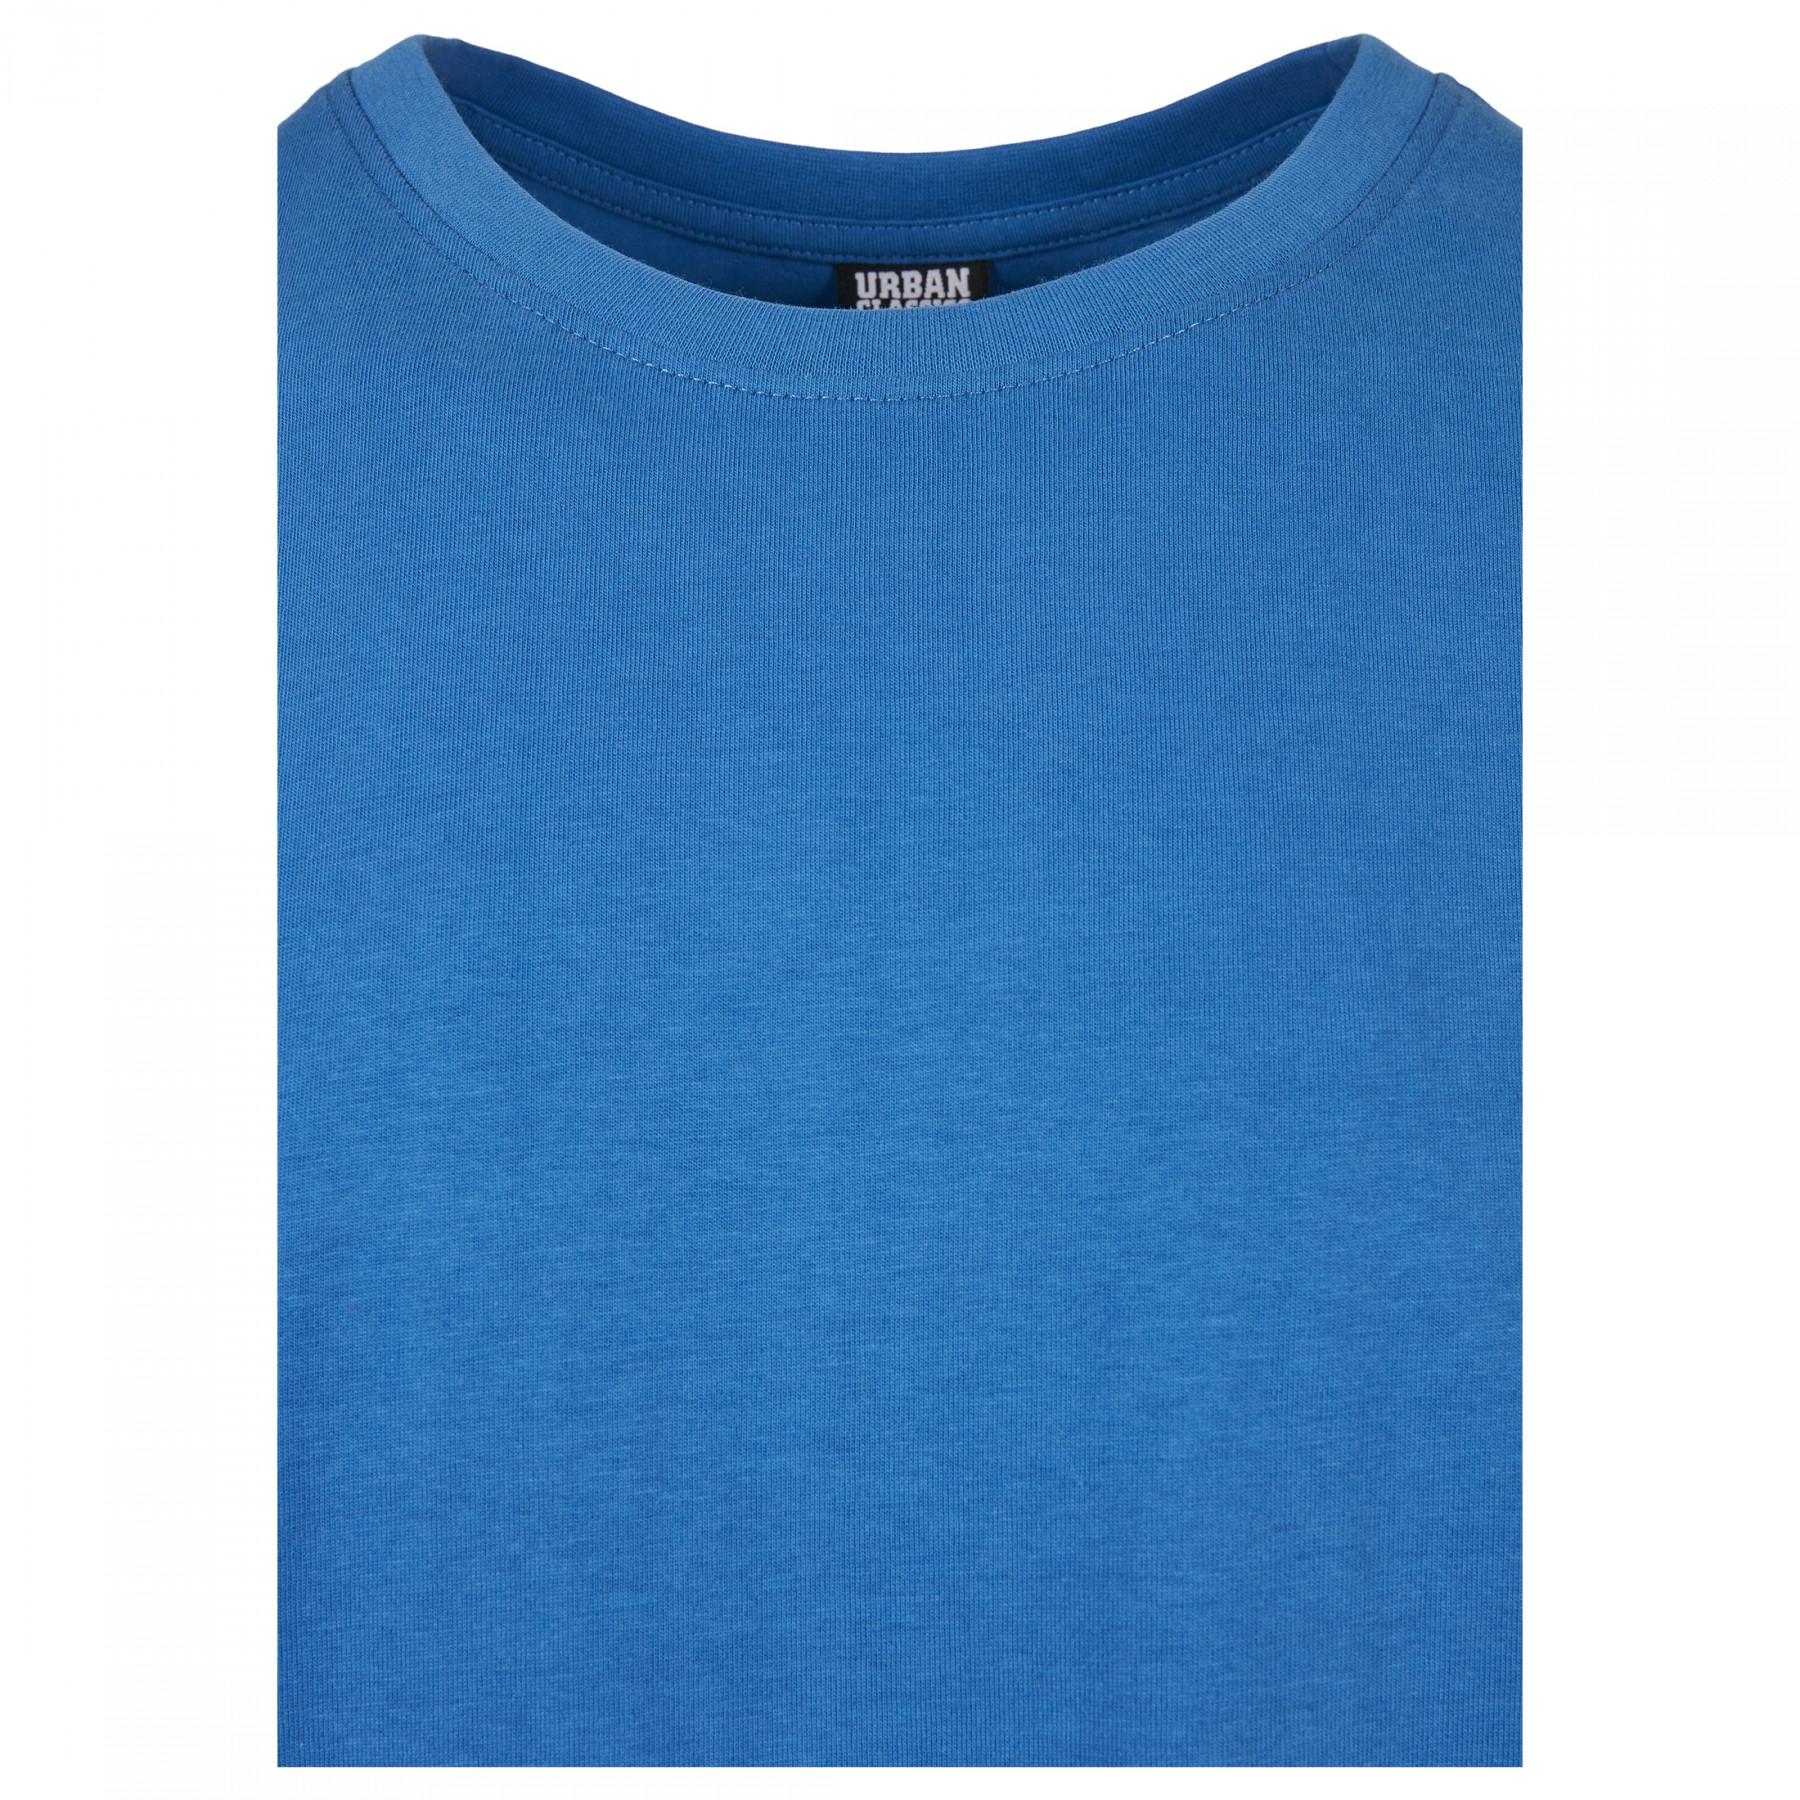 Lifestyle and Tee Urban Polo T-shirts Classics Turnup shirts Long - Man Shaped - - T-shirt